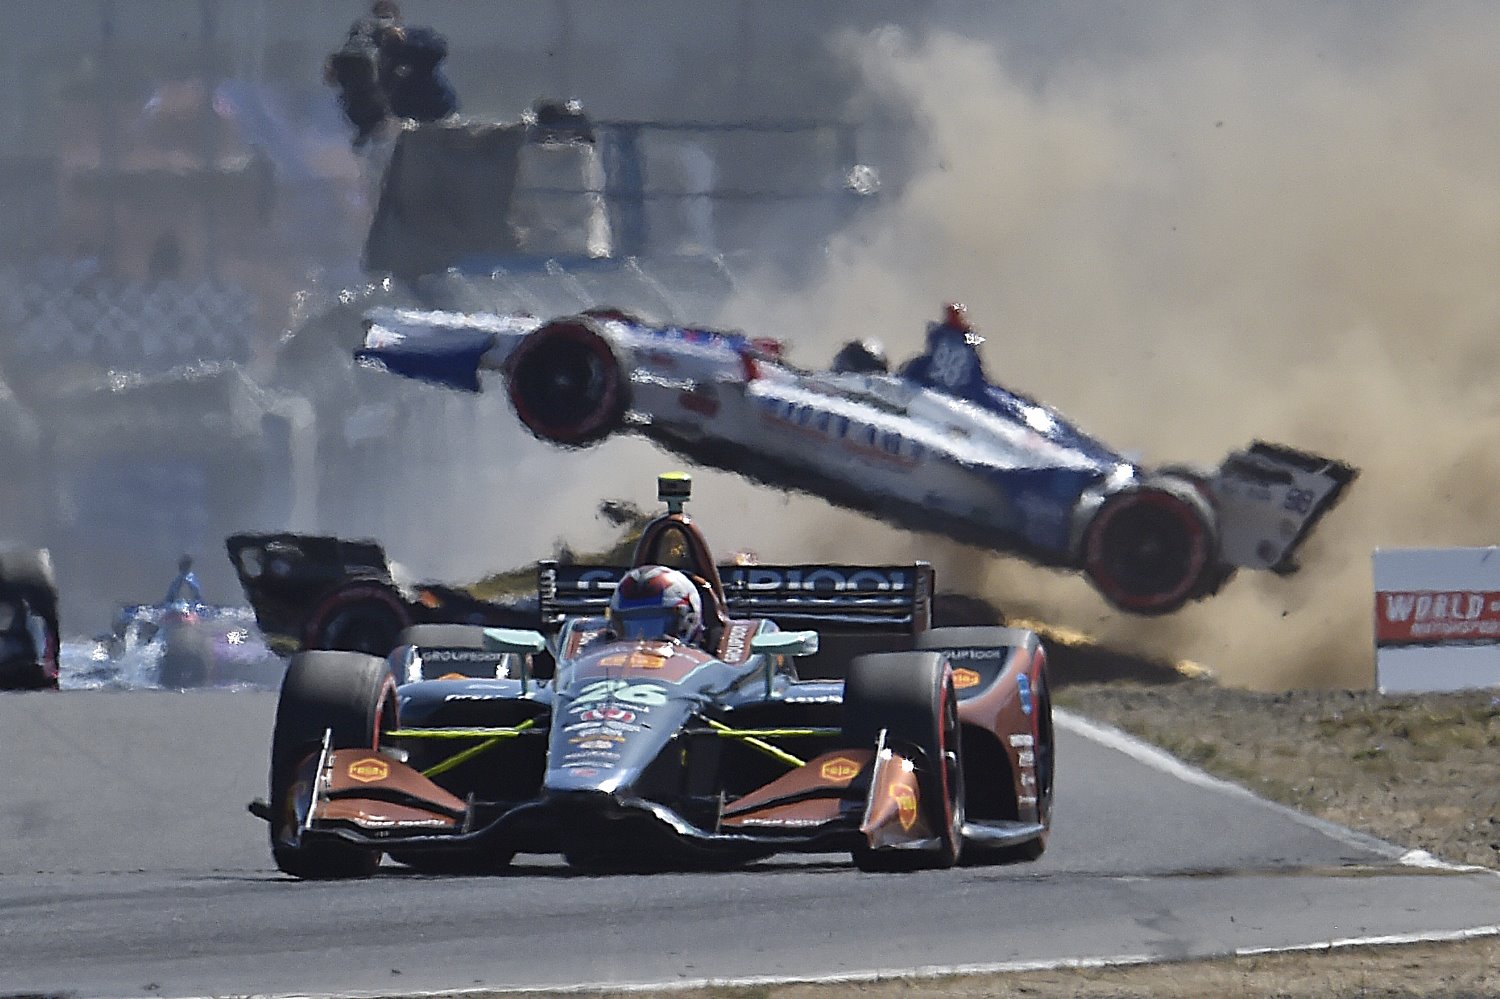 Marco Andretti flips